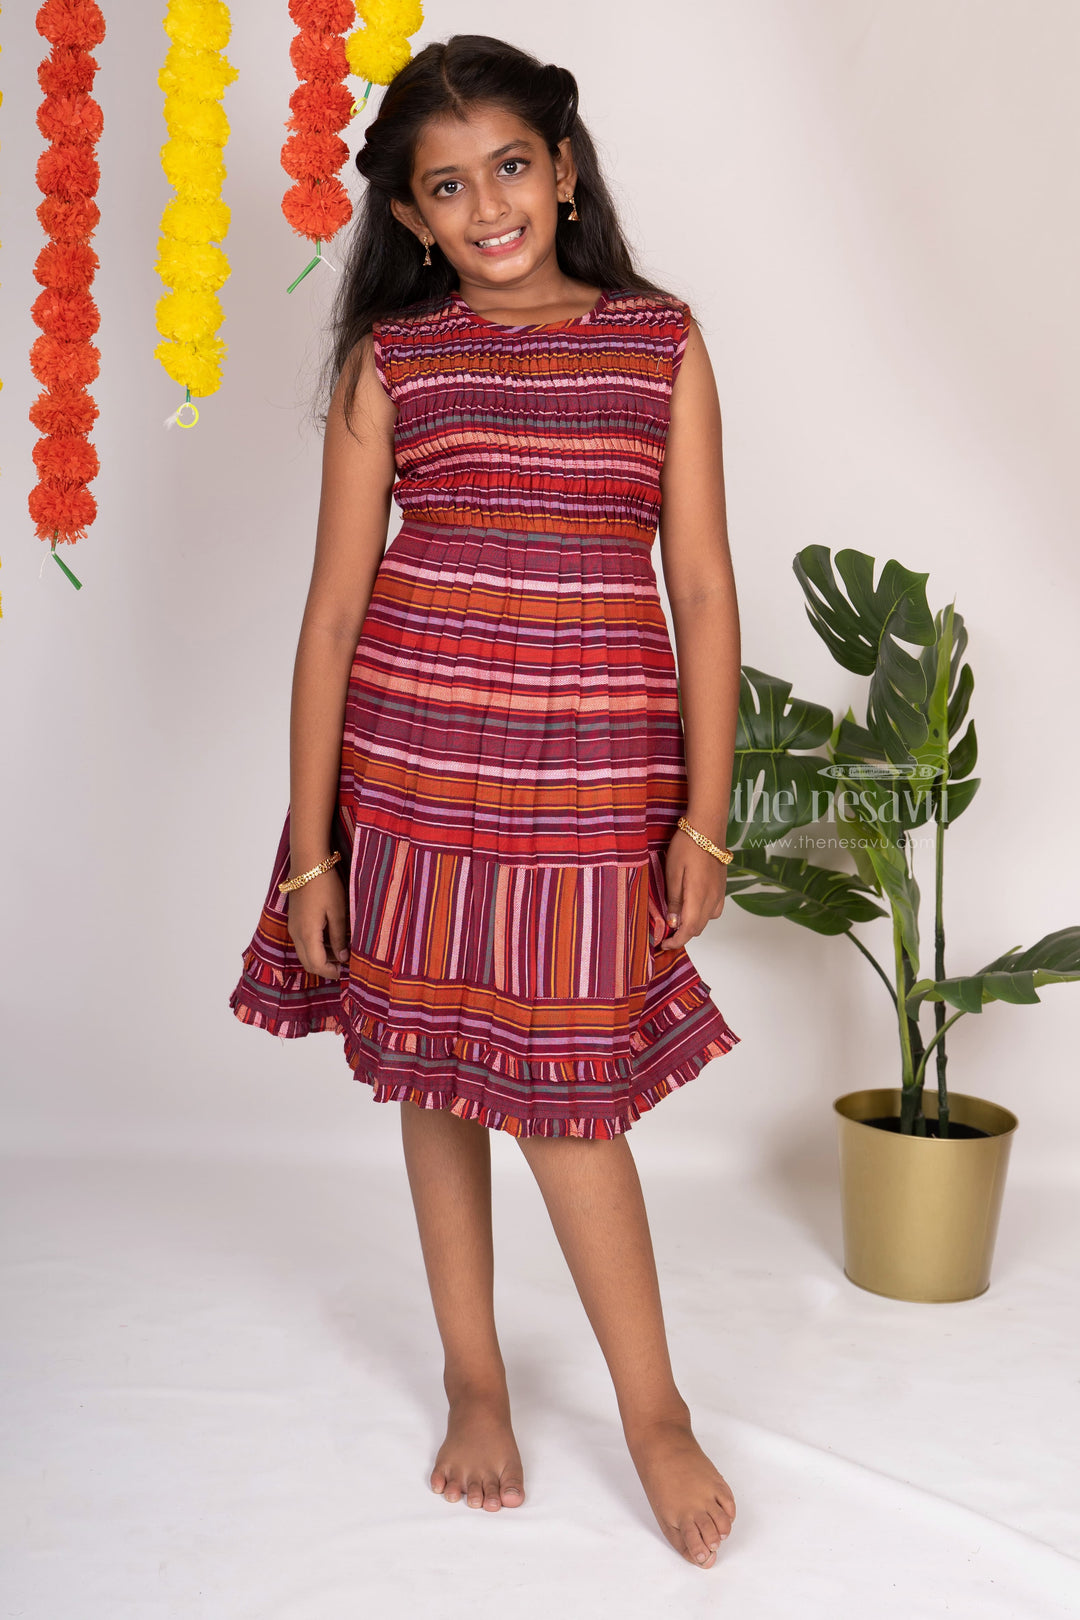 The Nesavu Frocks & Dresses Striped Designer Play Wear Soft Cotton Gowns For Baby Girls psr silks Nesavu 16 (1Y) / maroon GFC863